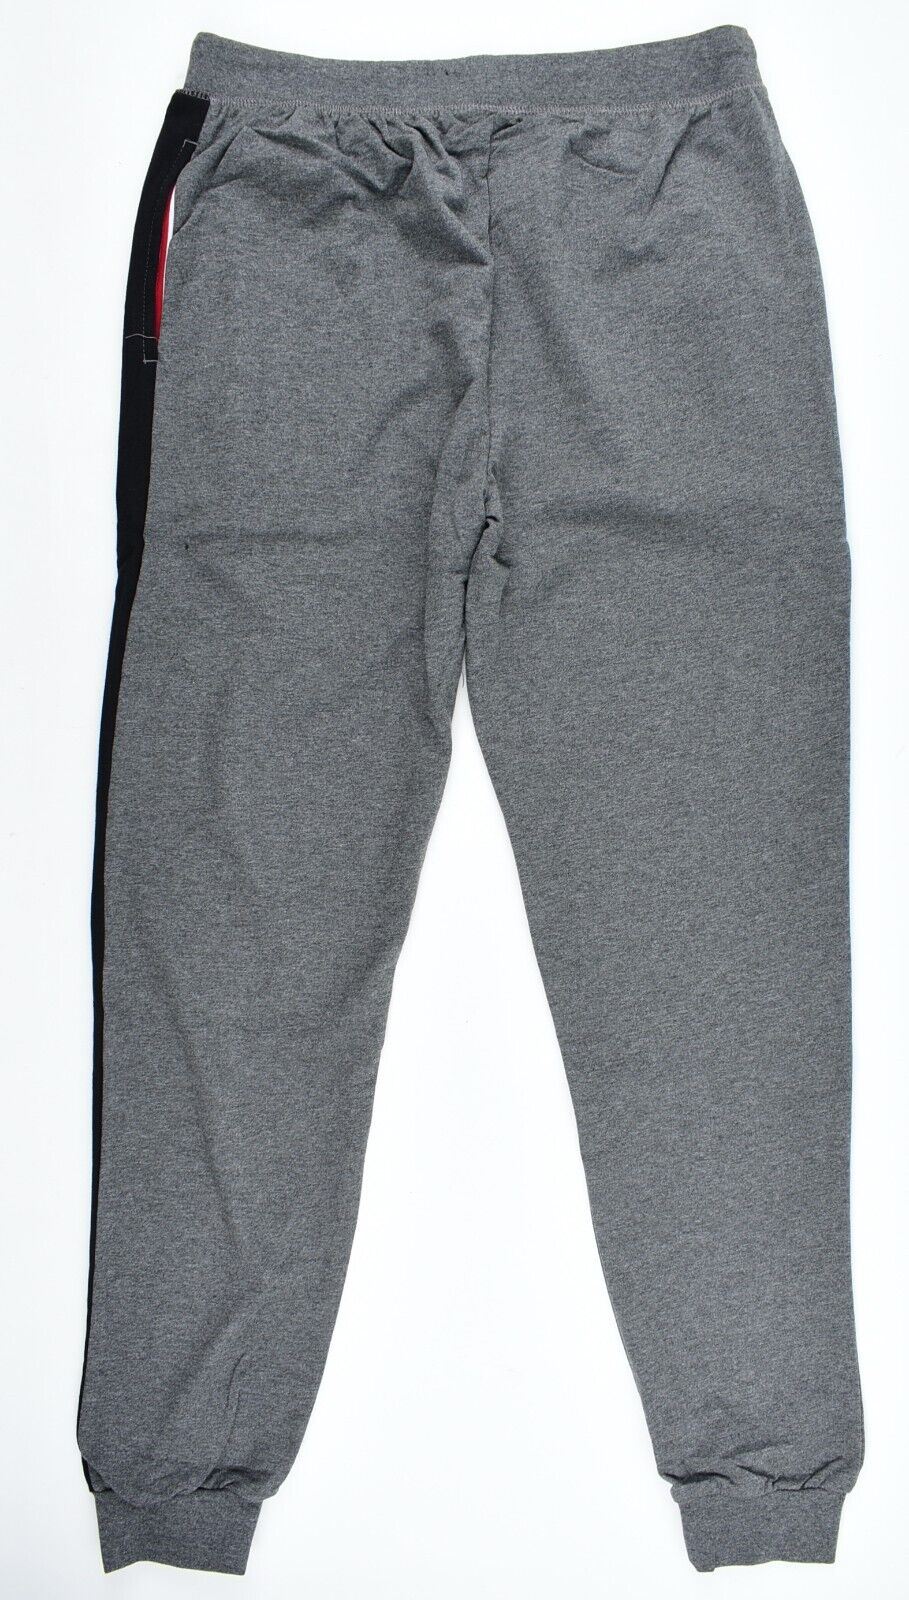 DKNY Mens Lounge Pants /Sweatpants, Grey-Black, size MEDIUM